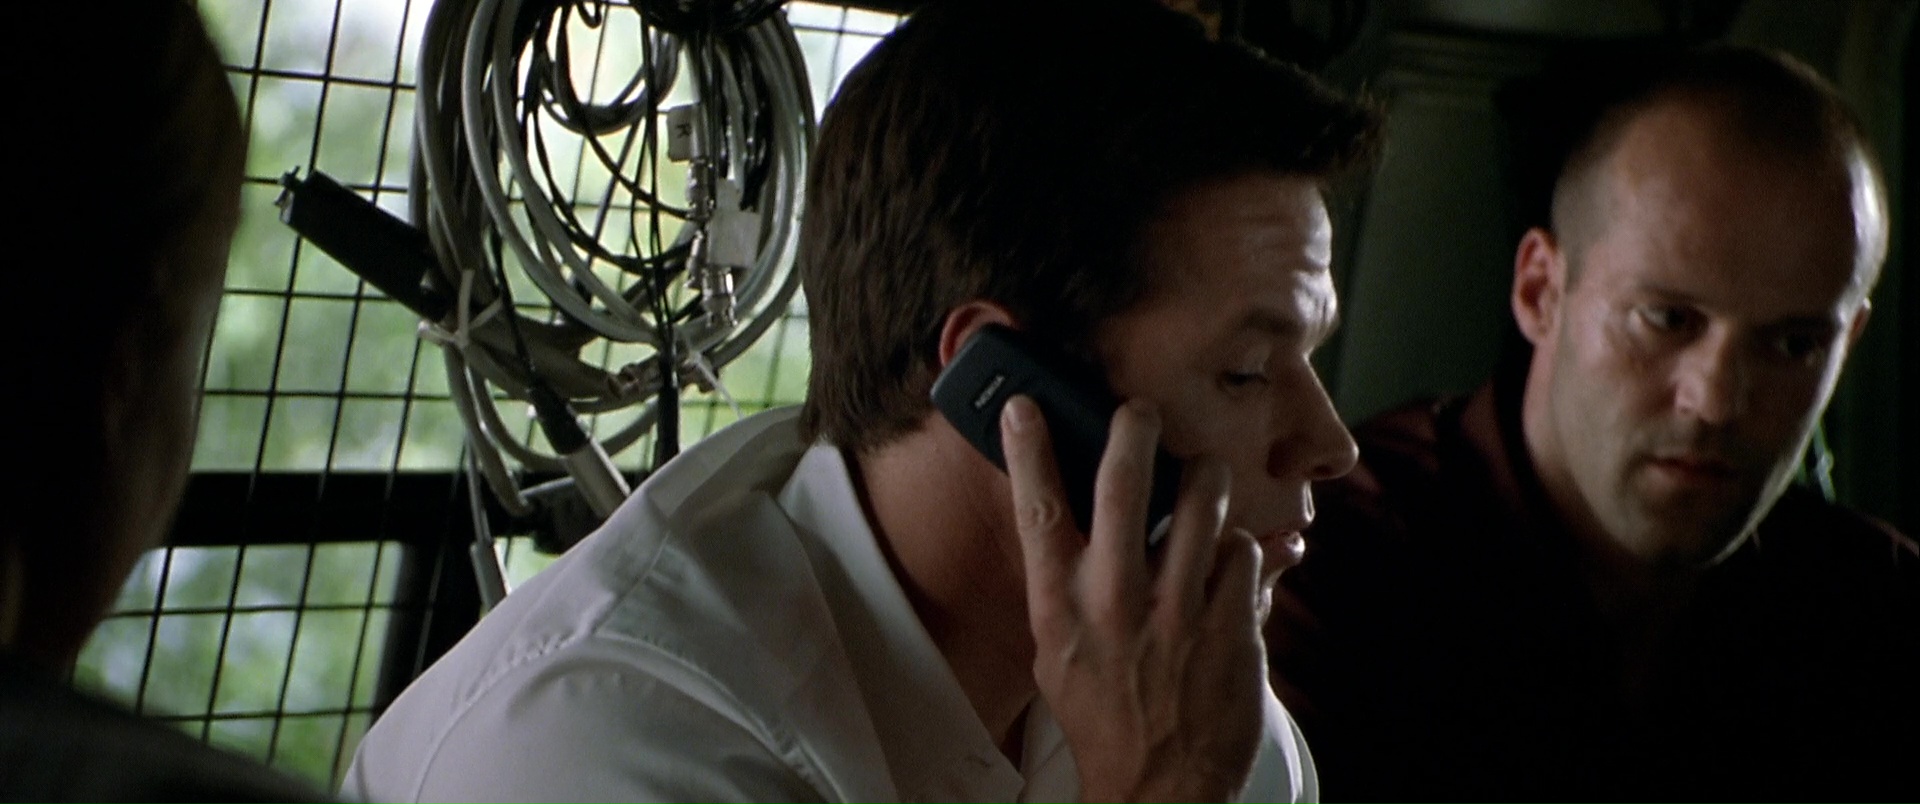 Nokia Phone Used by Mark Wahlberg in The Italian Job (2003) Movie1920 x 804